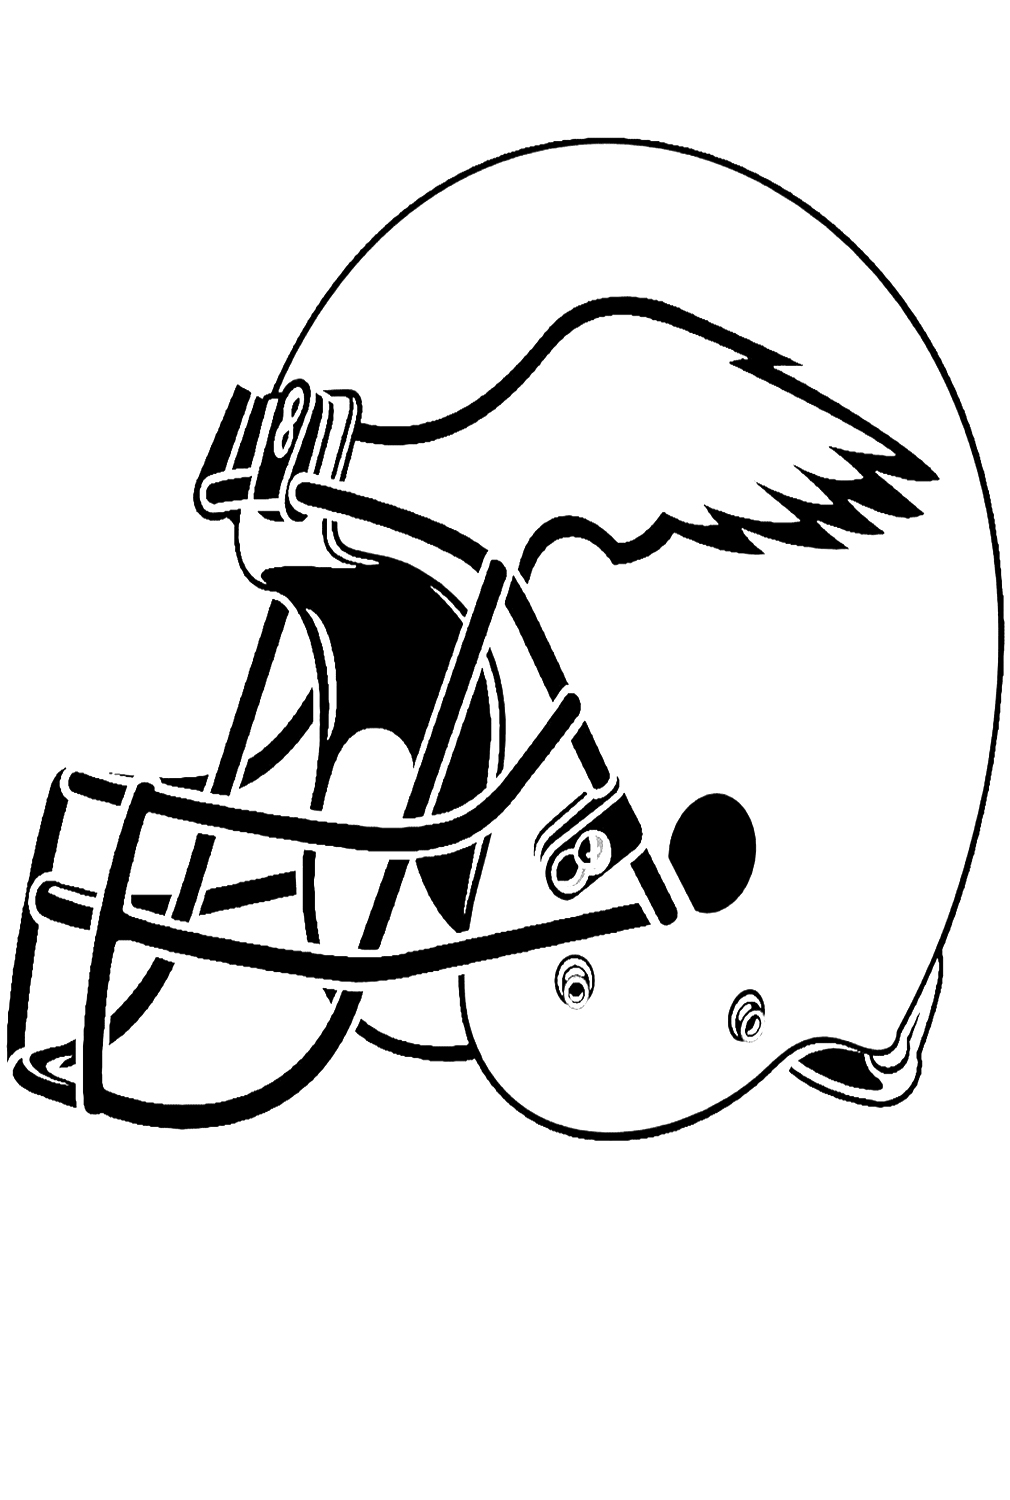 Philadelphia Eagles-helm van NFL